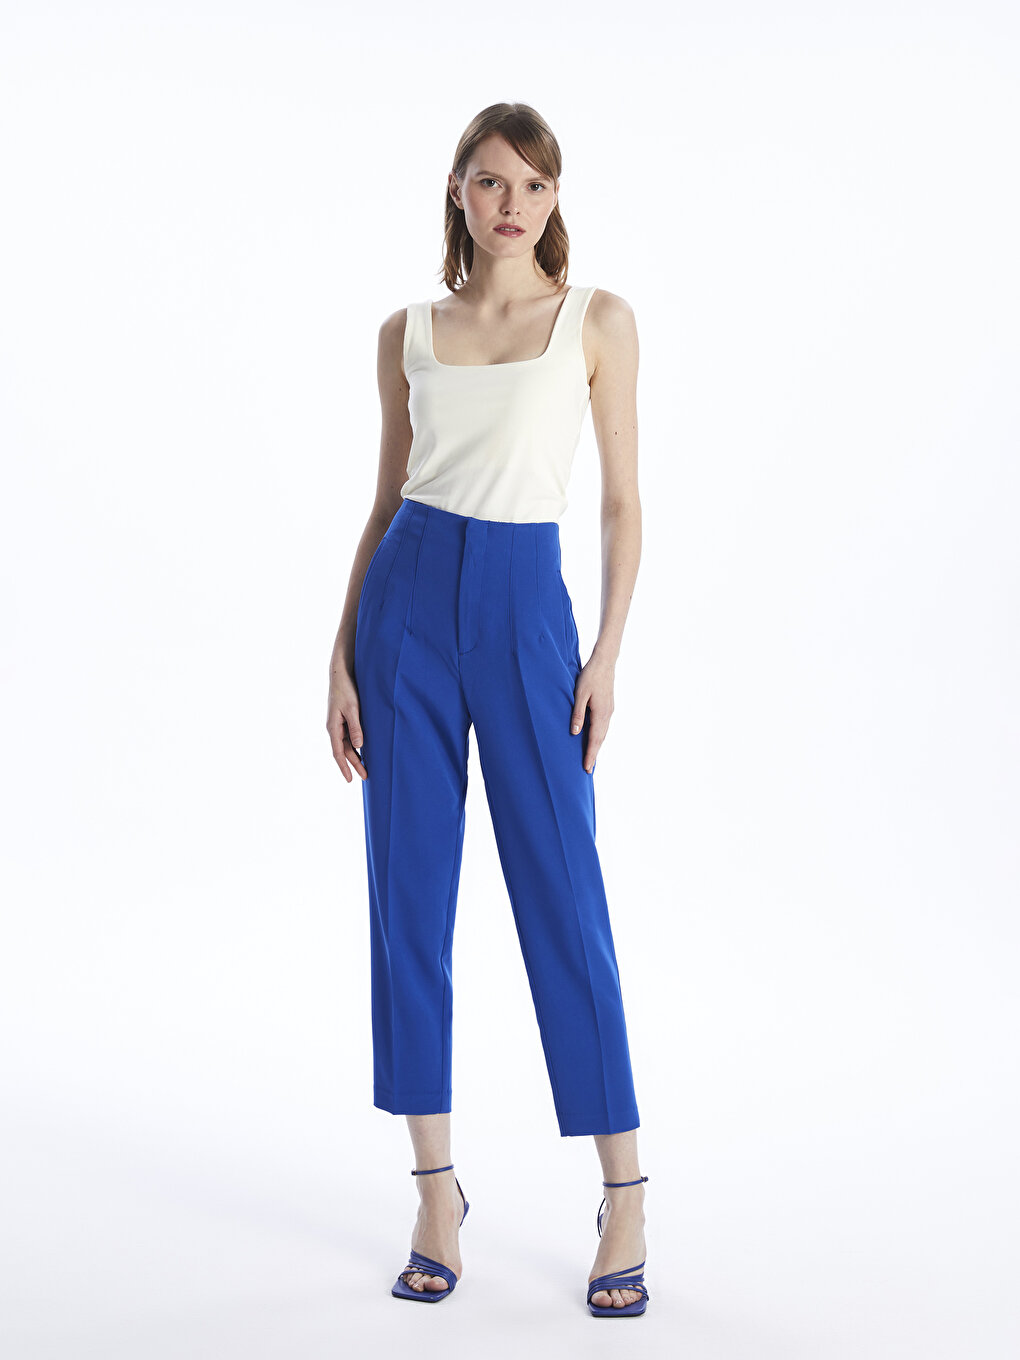 Zara Women's Jeans Trousers Super Stretch High Skinny 124 8/12ft W30 L28  Used | eBay